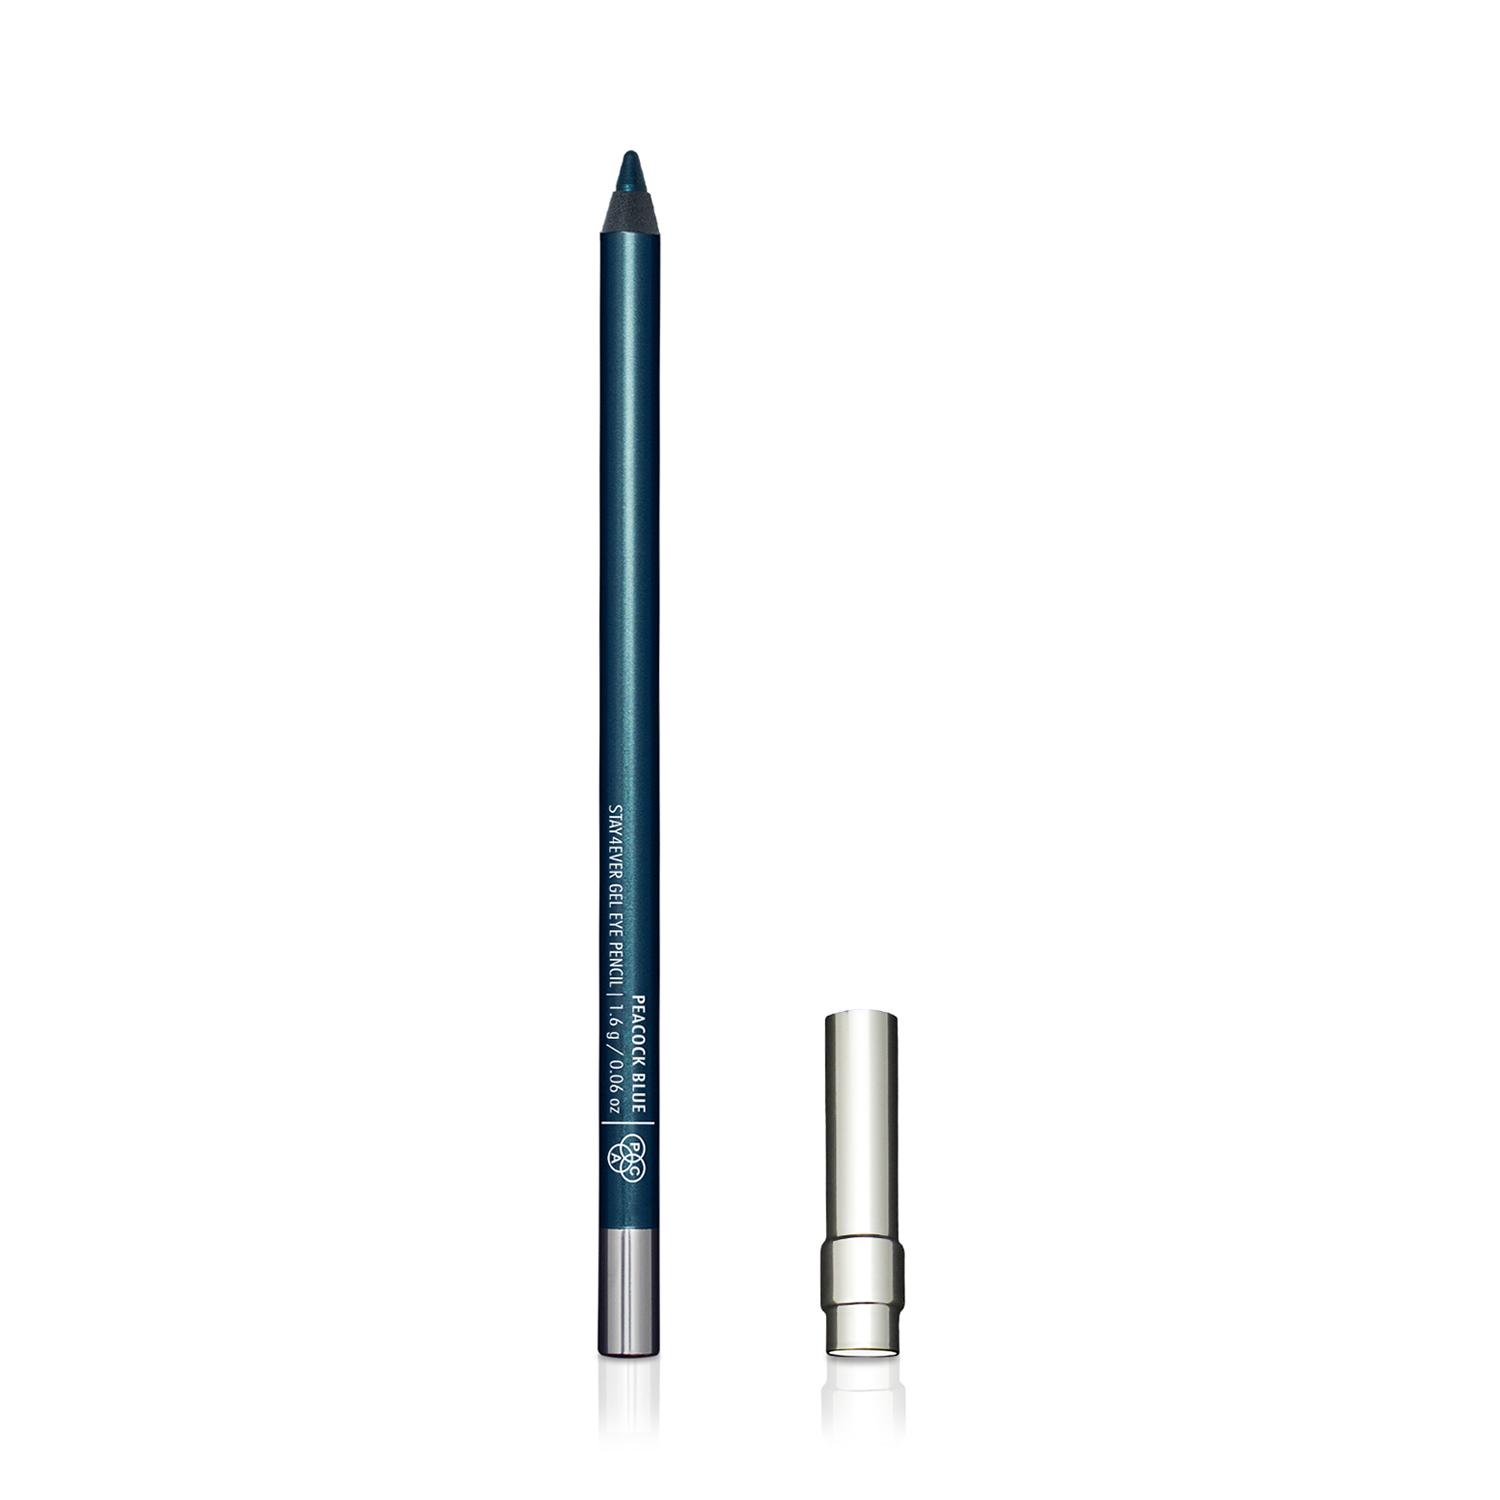 PAC Stay4Ever Gel Eye Pencil - Peacock Blue (1.6g)